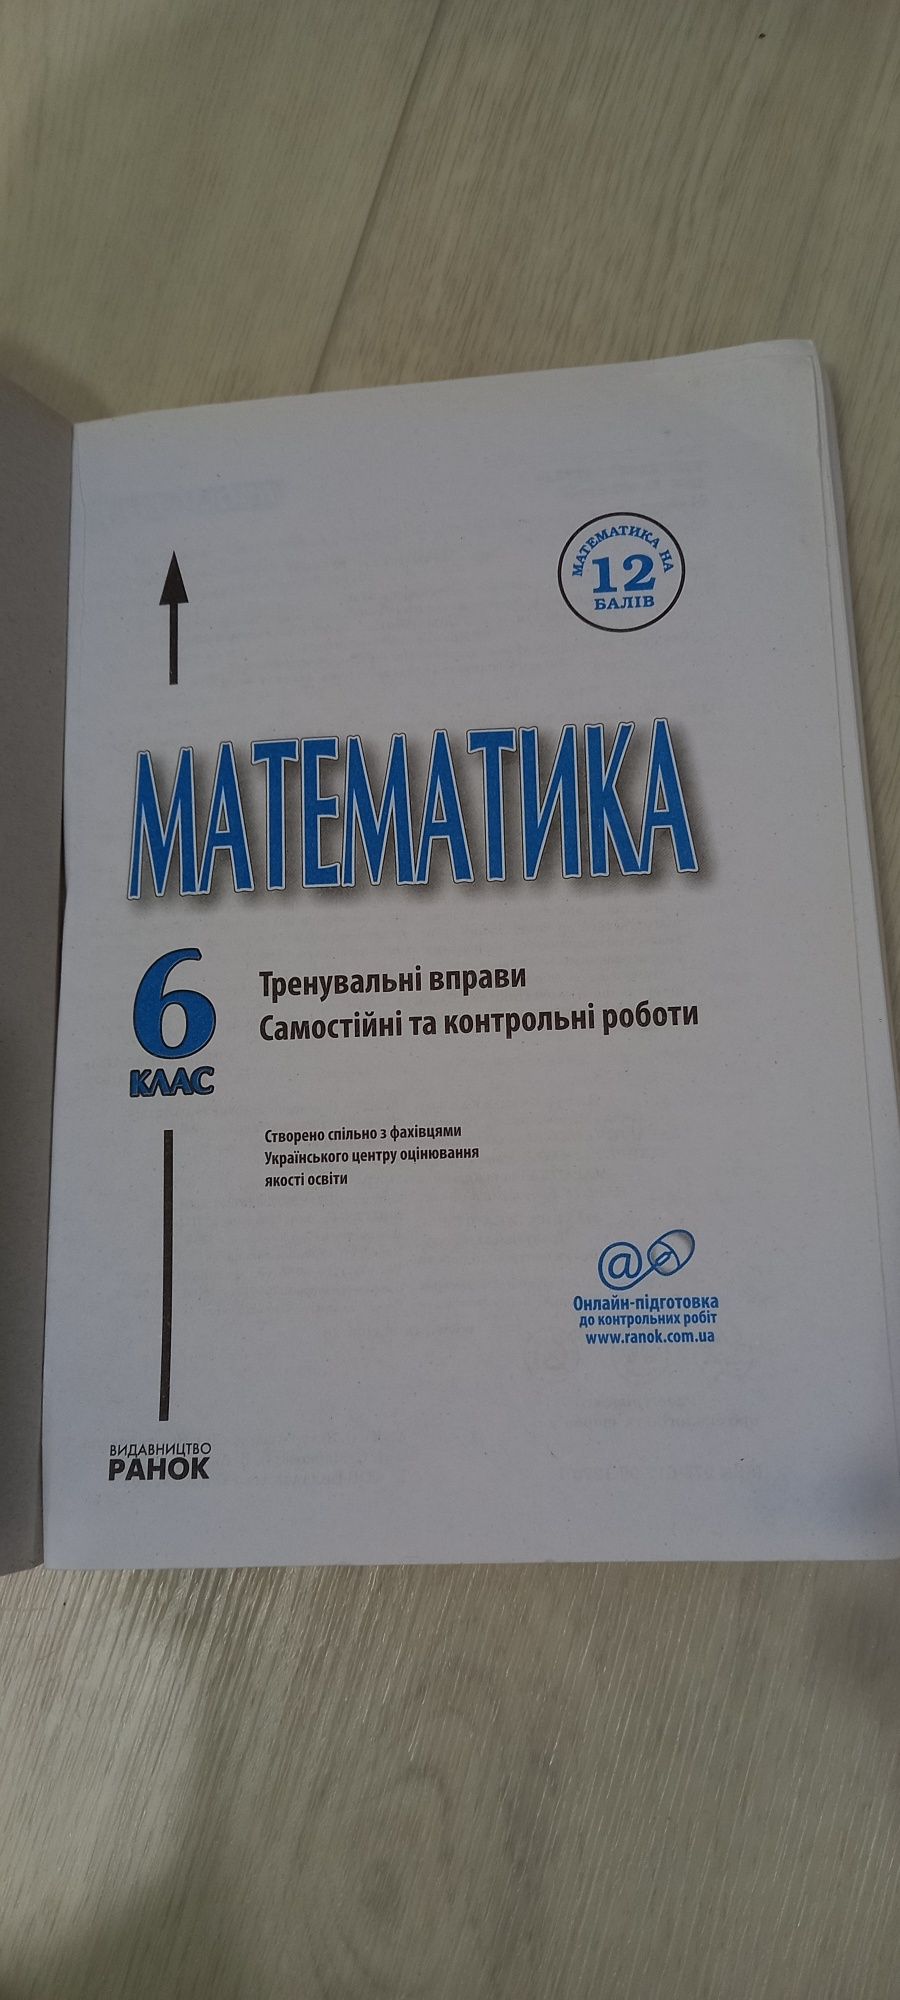 Математика 6 клас  новая книга